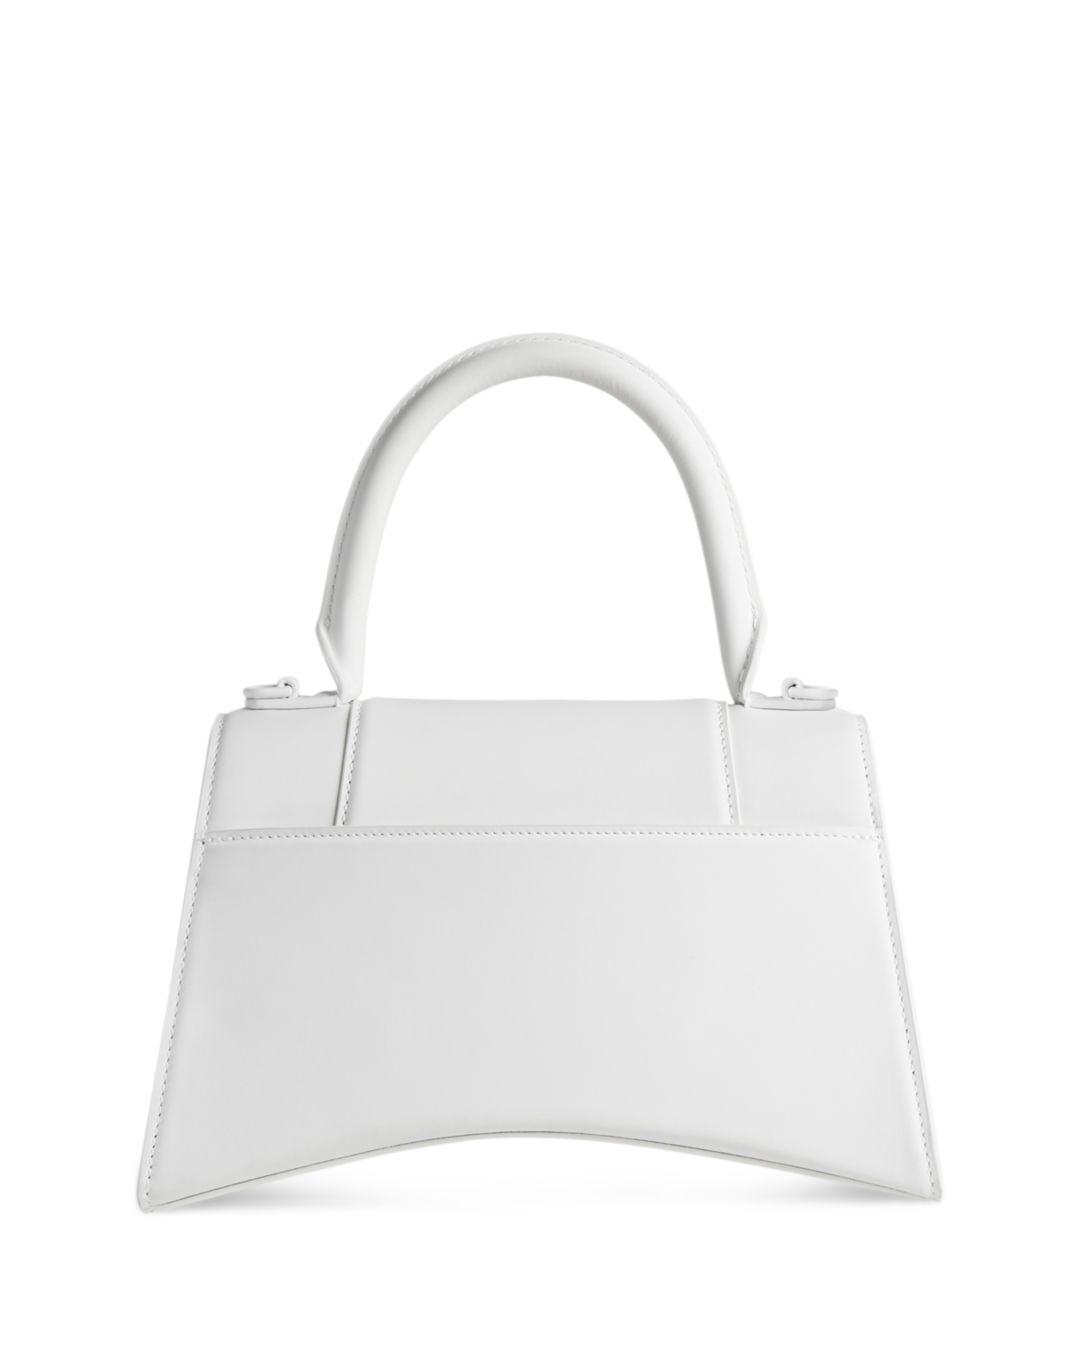 Balenciaga Hourglass Small Handbag White